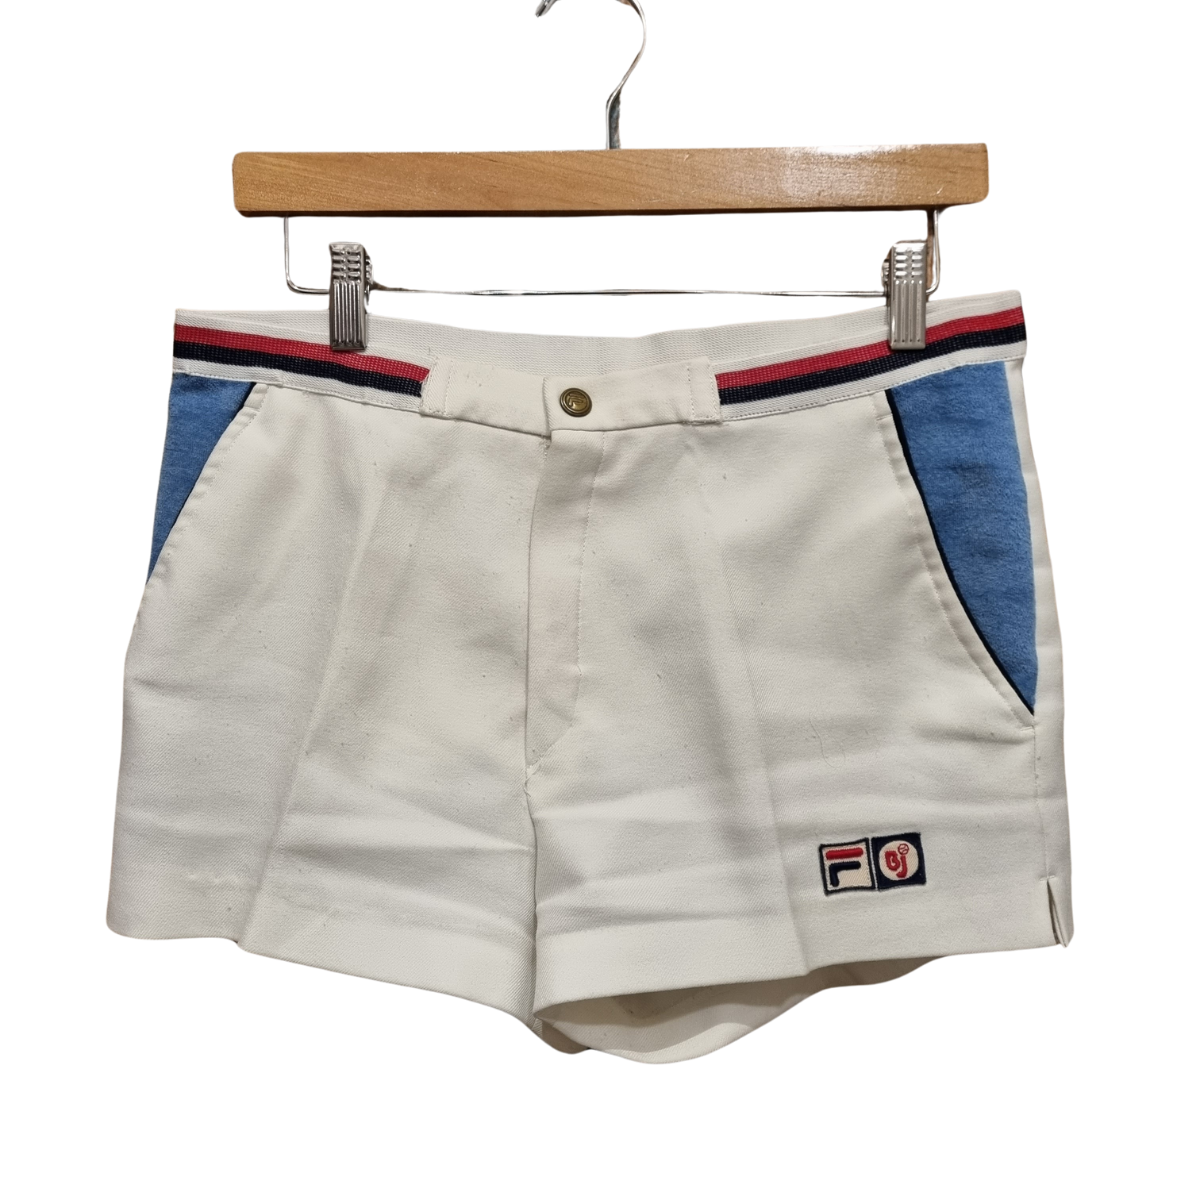 Vintage Fila BJ Bjorn Borg tennis shorts '80